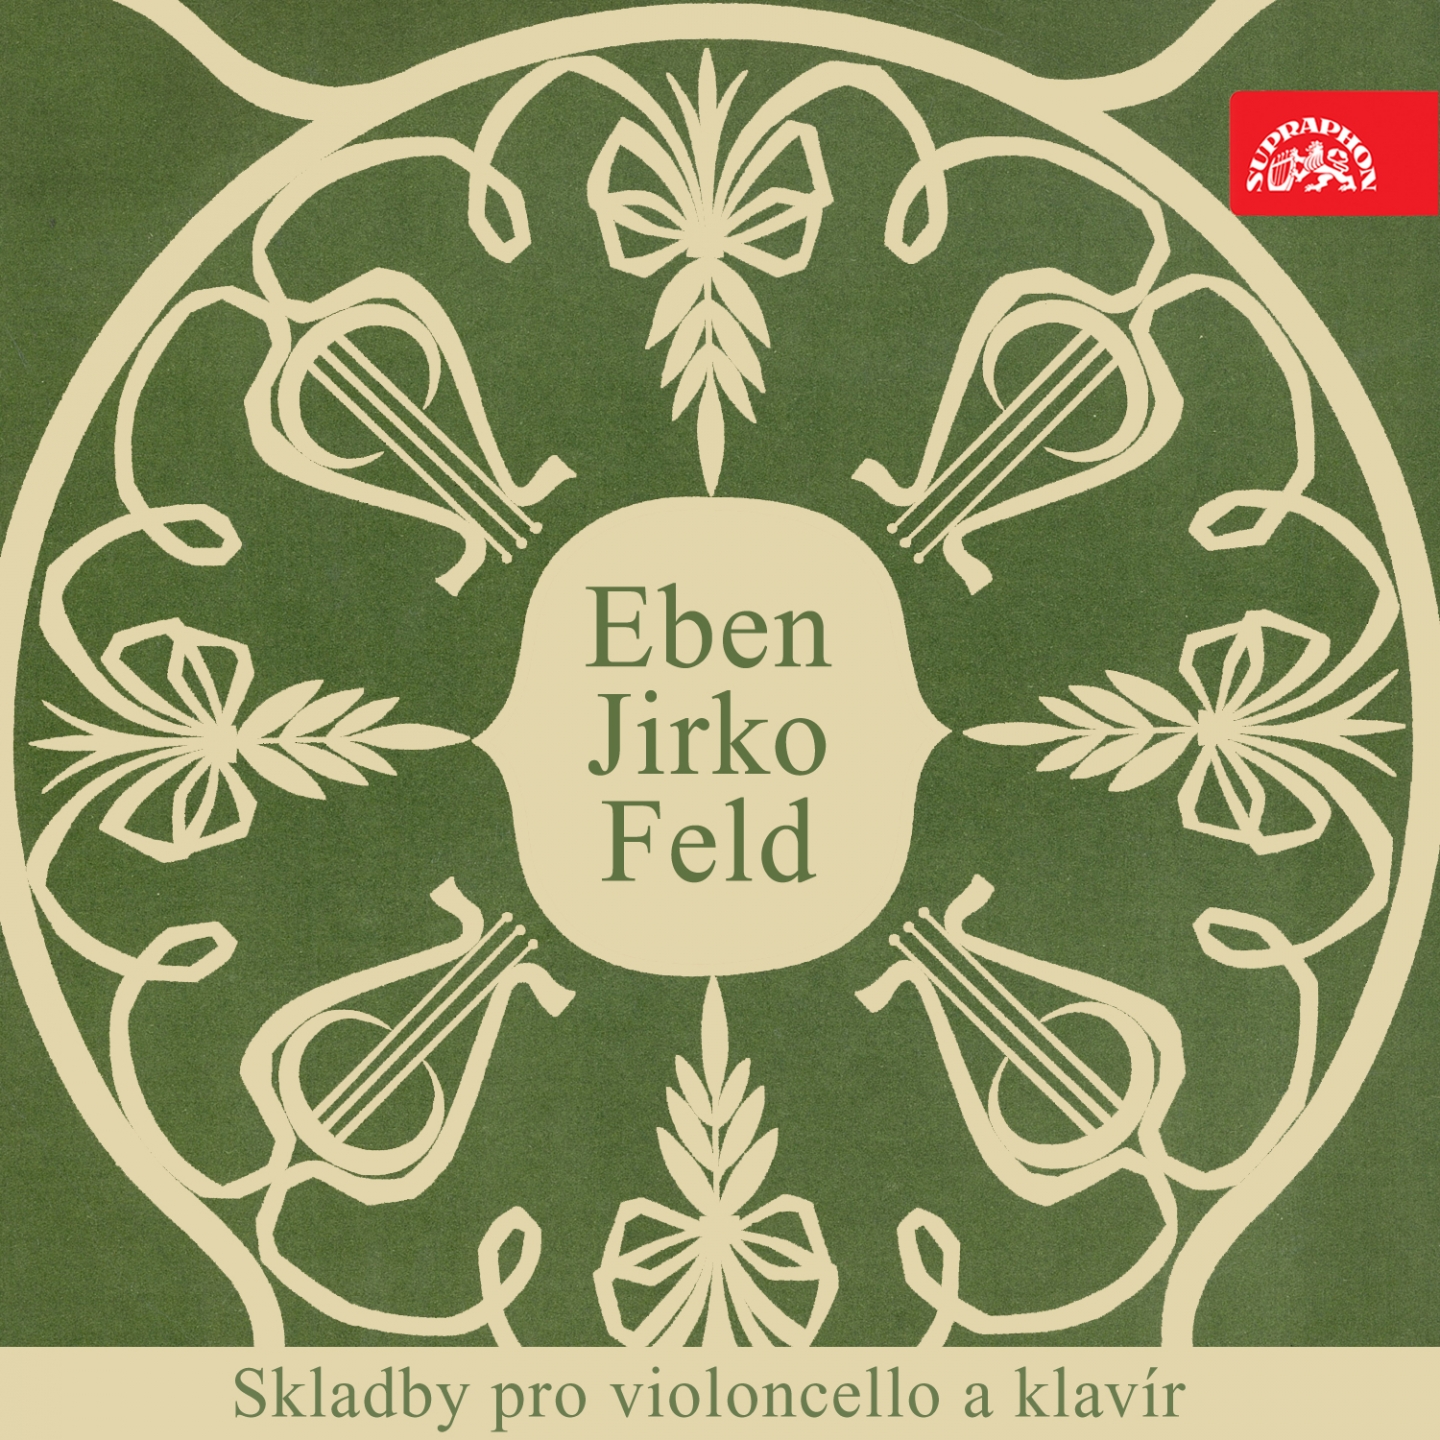 Eben, Jirko, Feld: Pieces for Cello and Piano